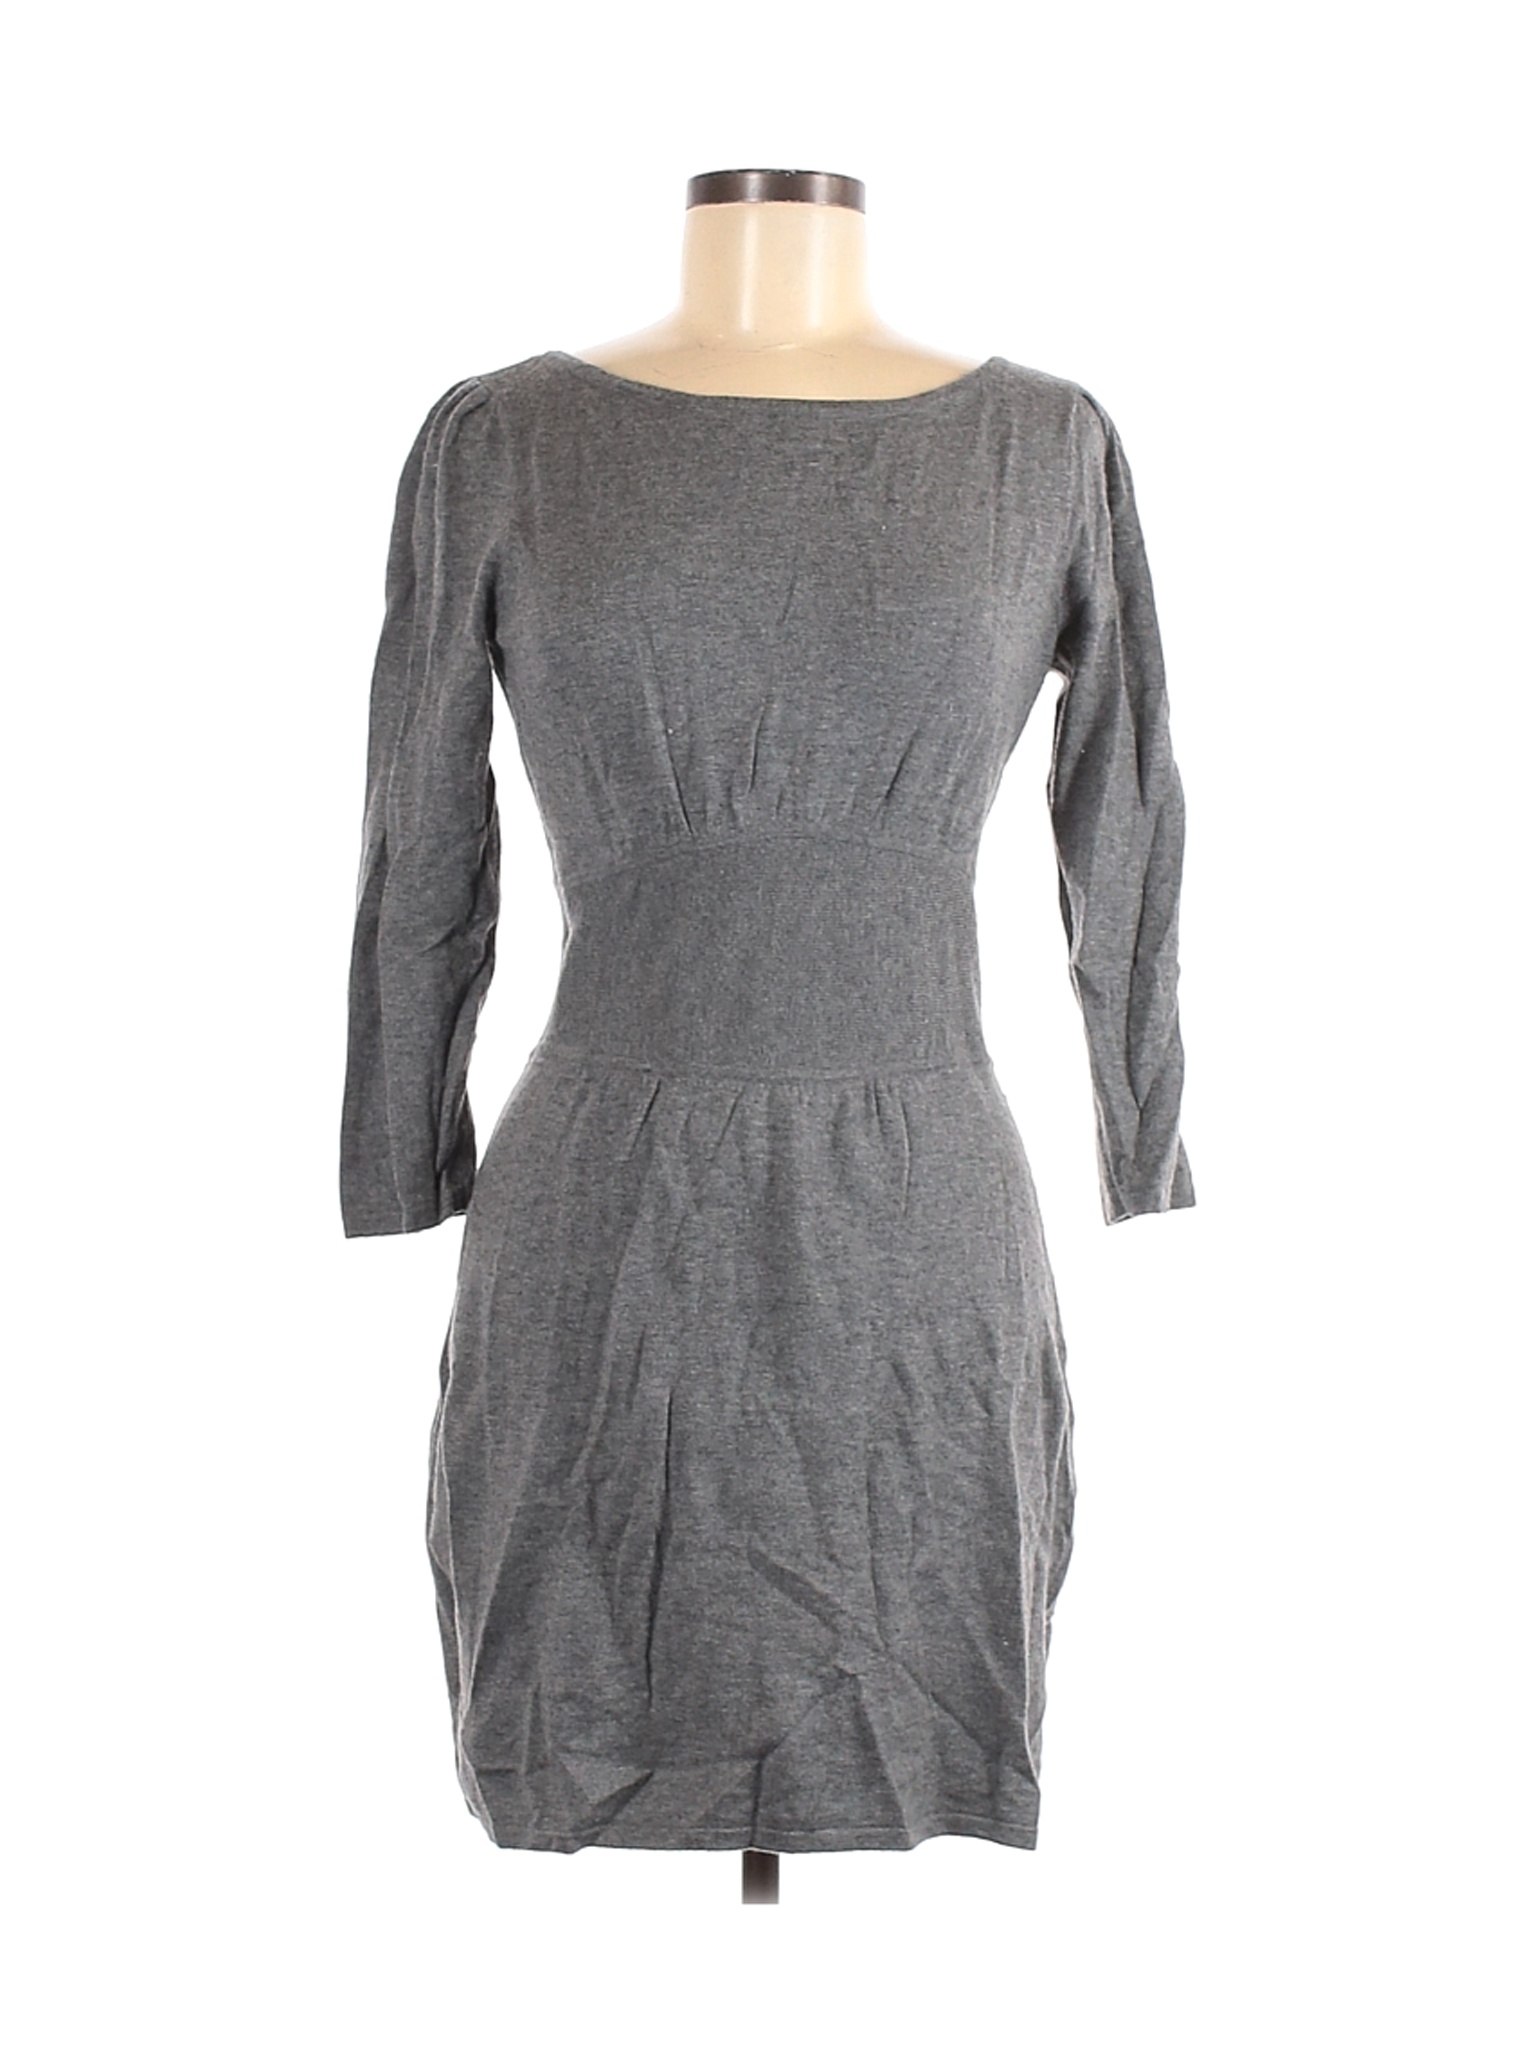 Express Women Gray Casual Dress M | eBay